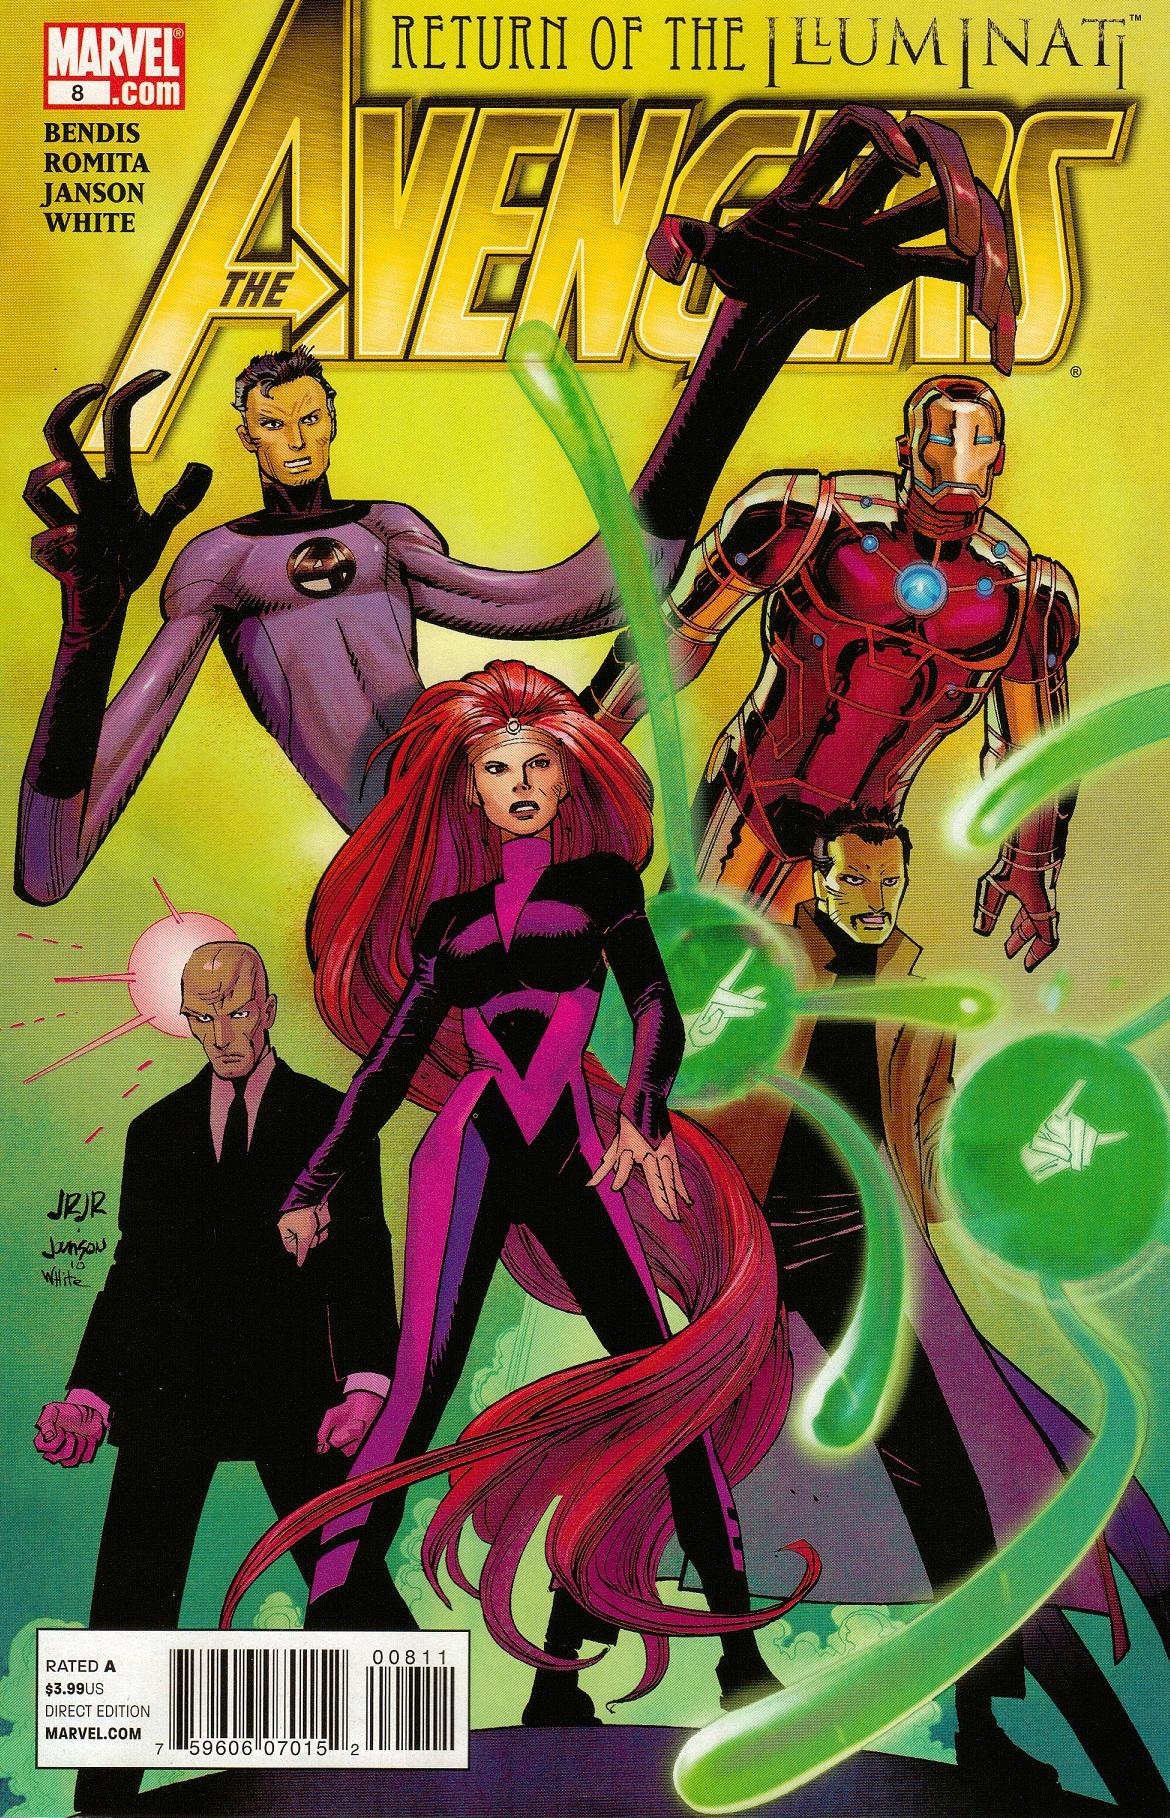 The Avengers Vol. 4 #8